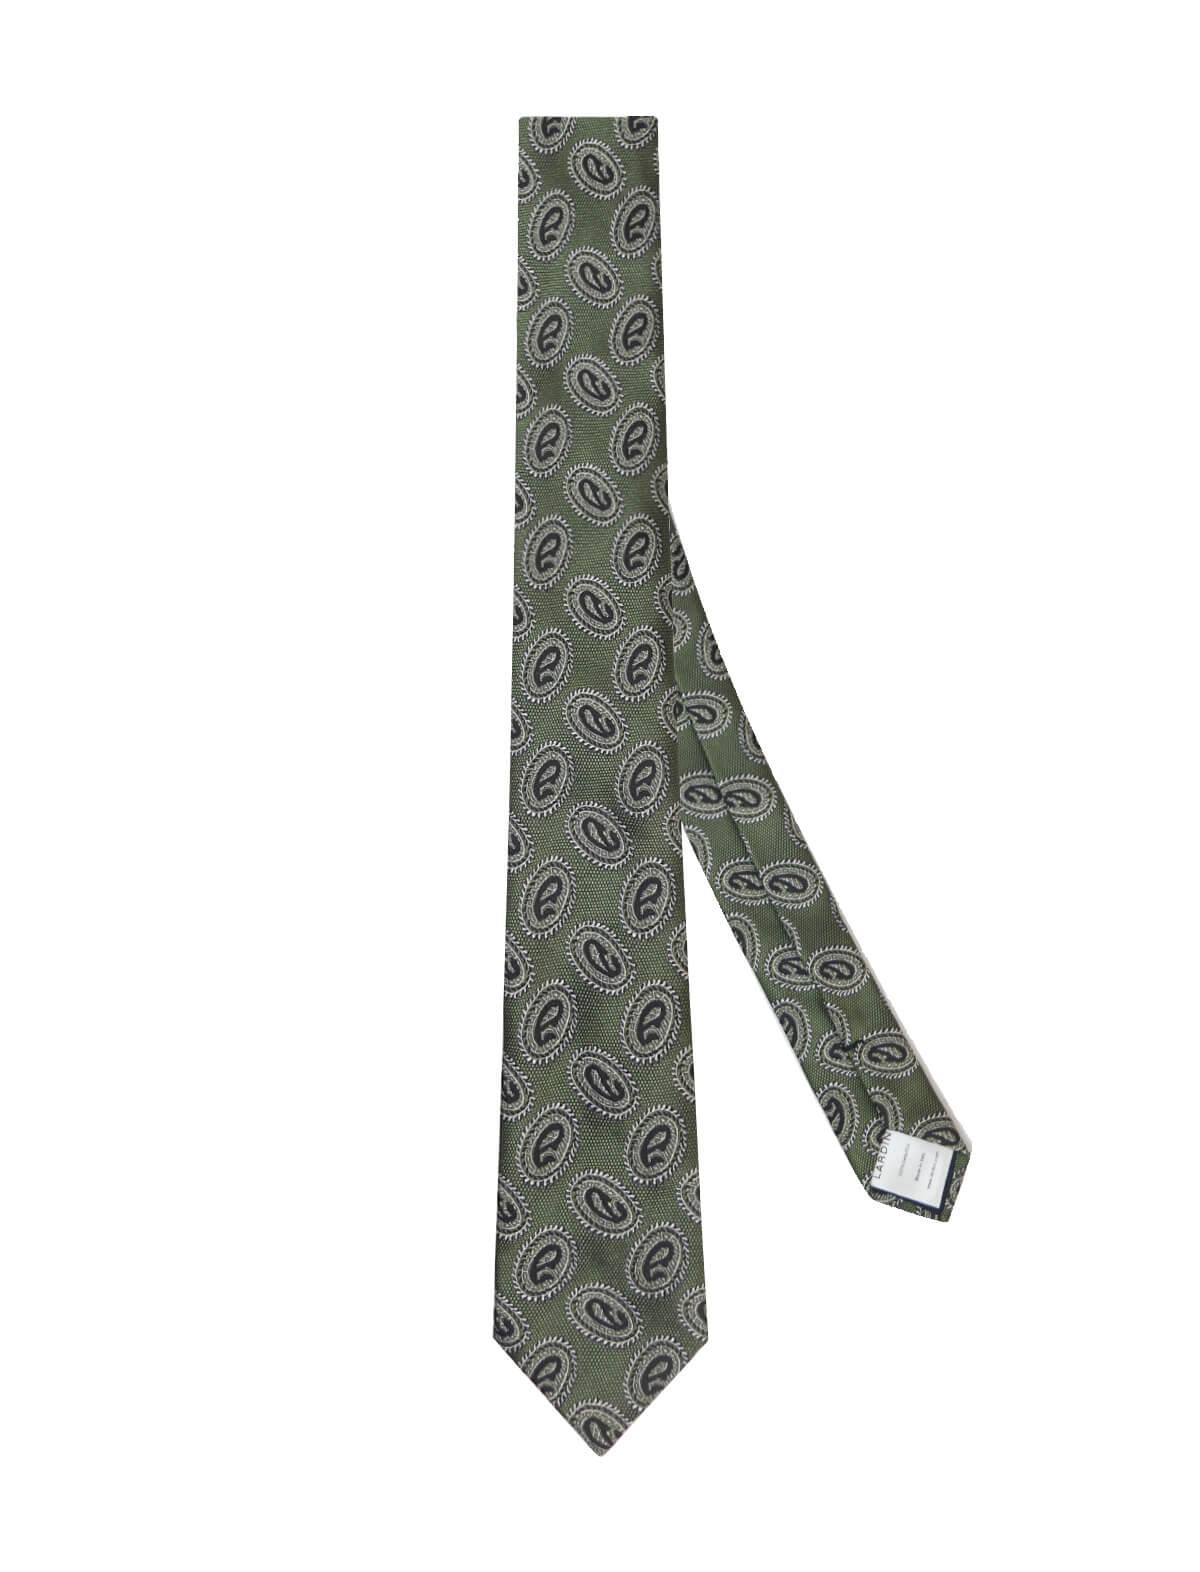 LARDINI Silk Tie in Khaki Green Paisley | CLOSET Singapore